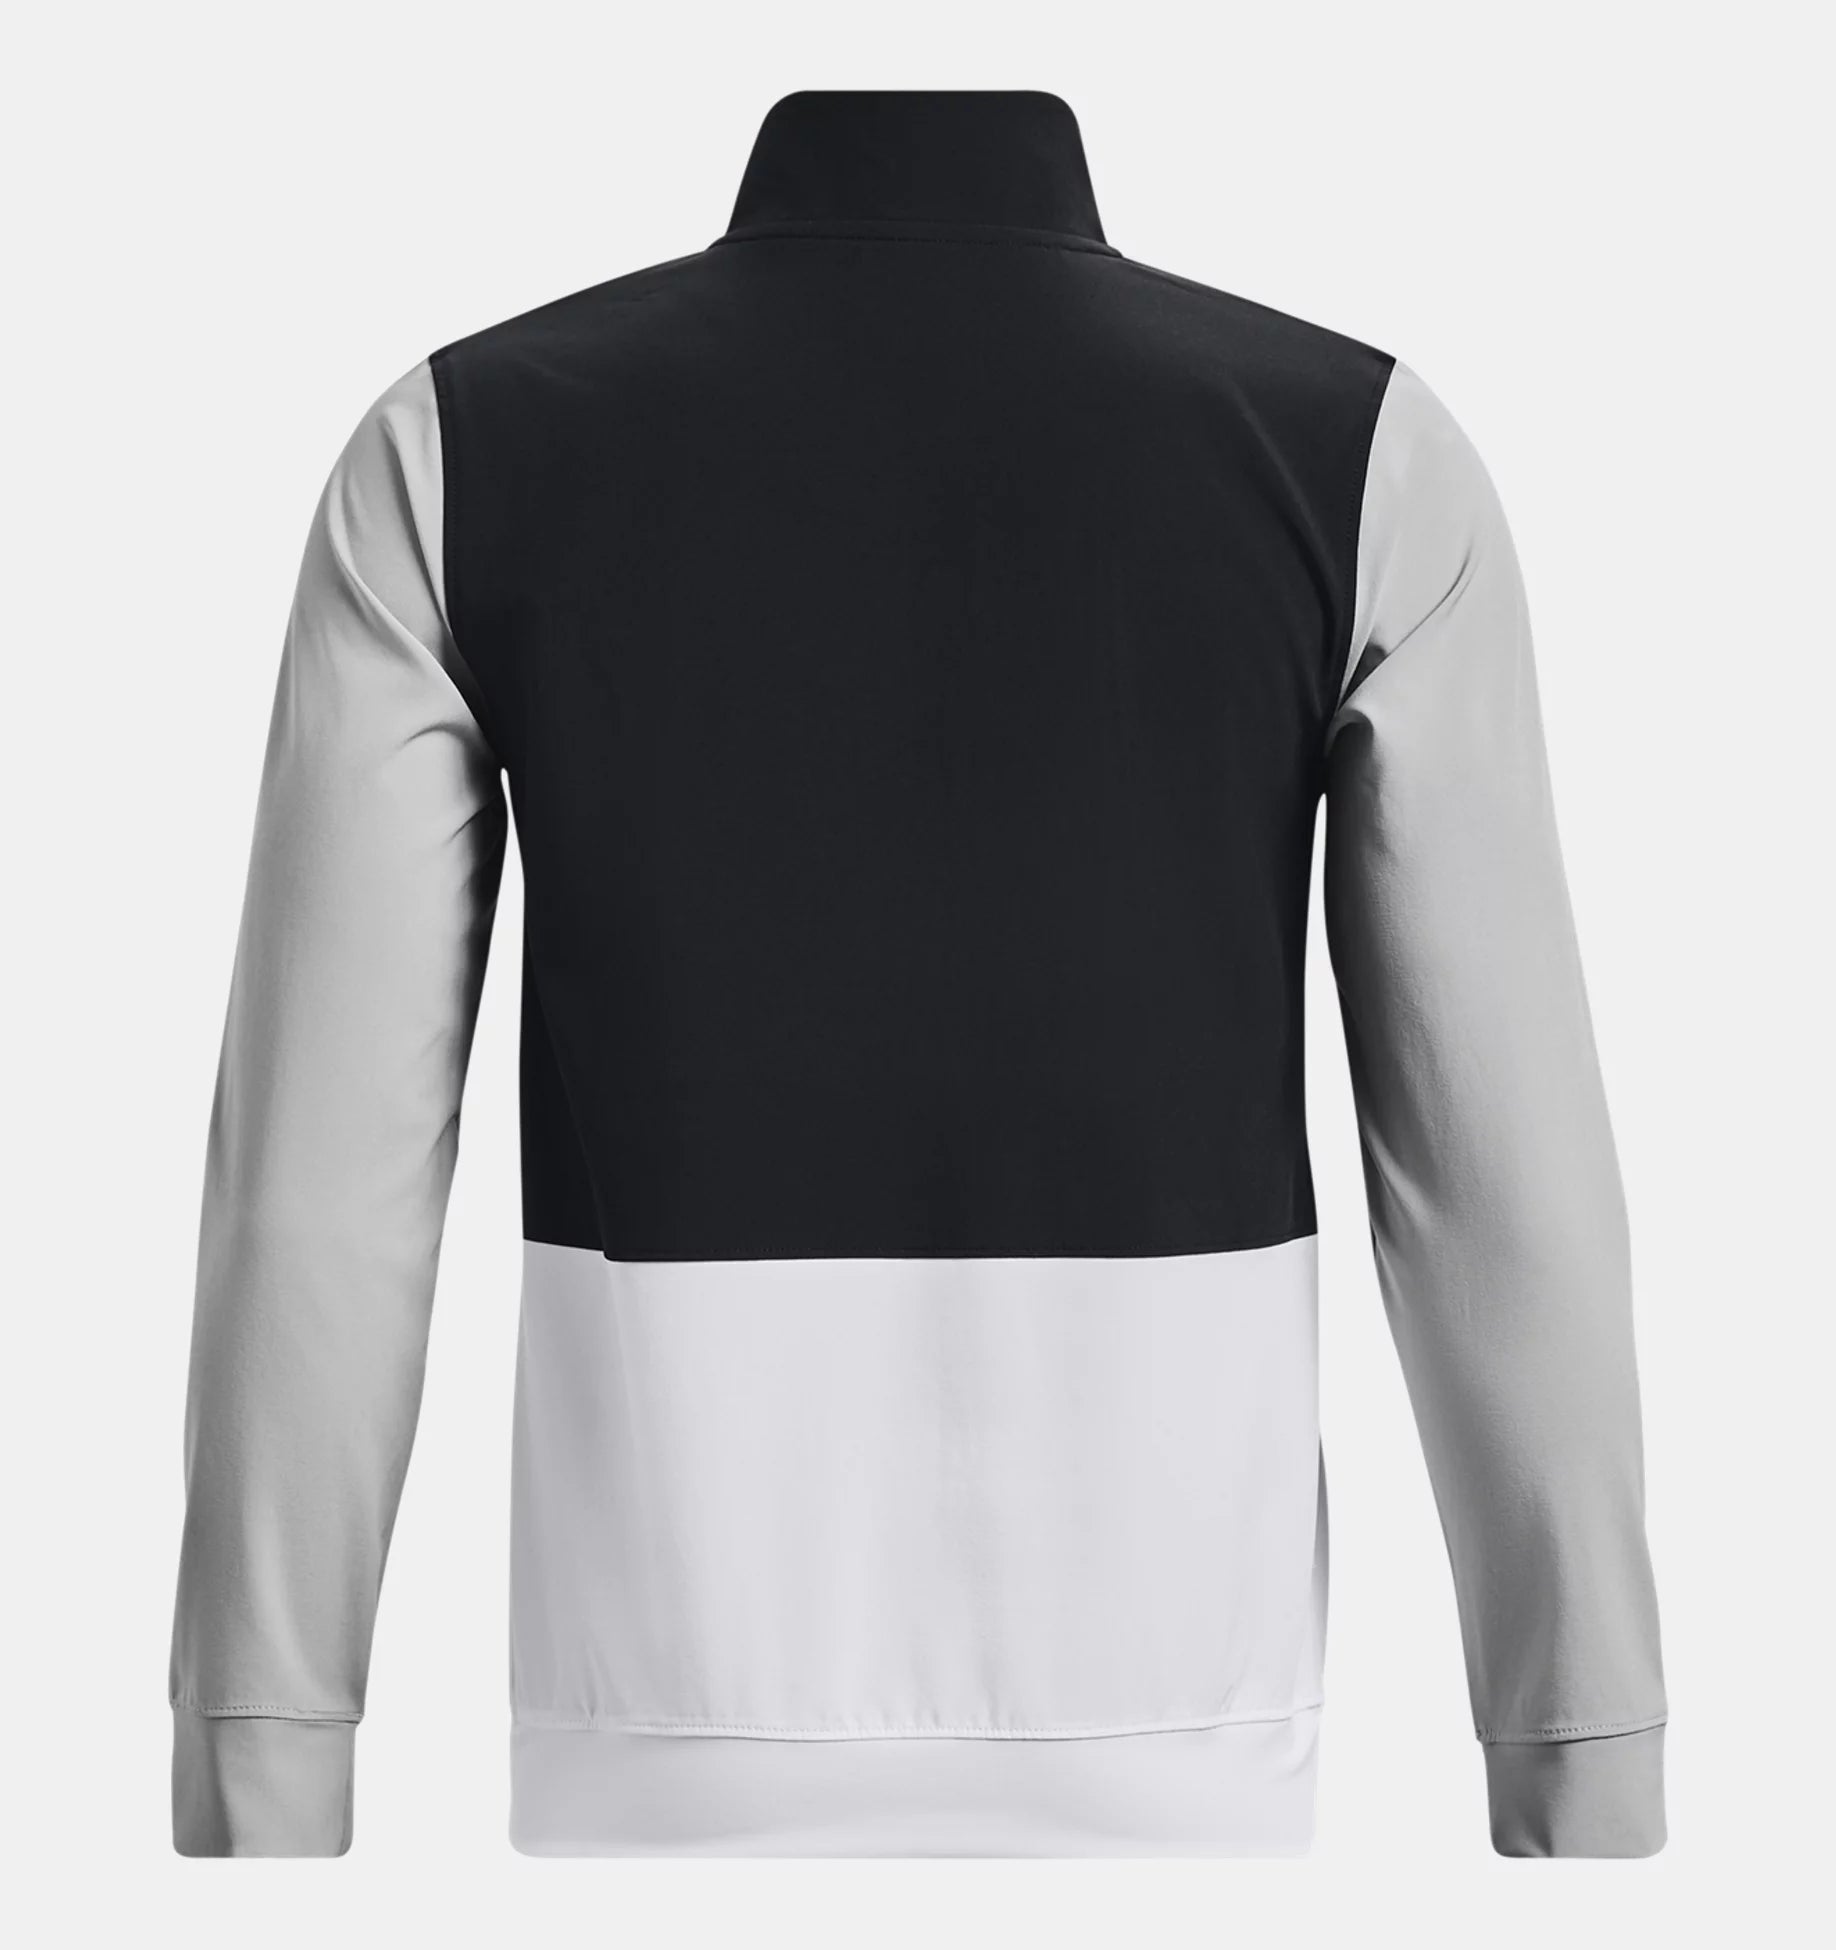 Under Armor UA Woven Junior Sweatshirt - Black/Grey/White